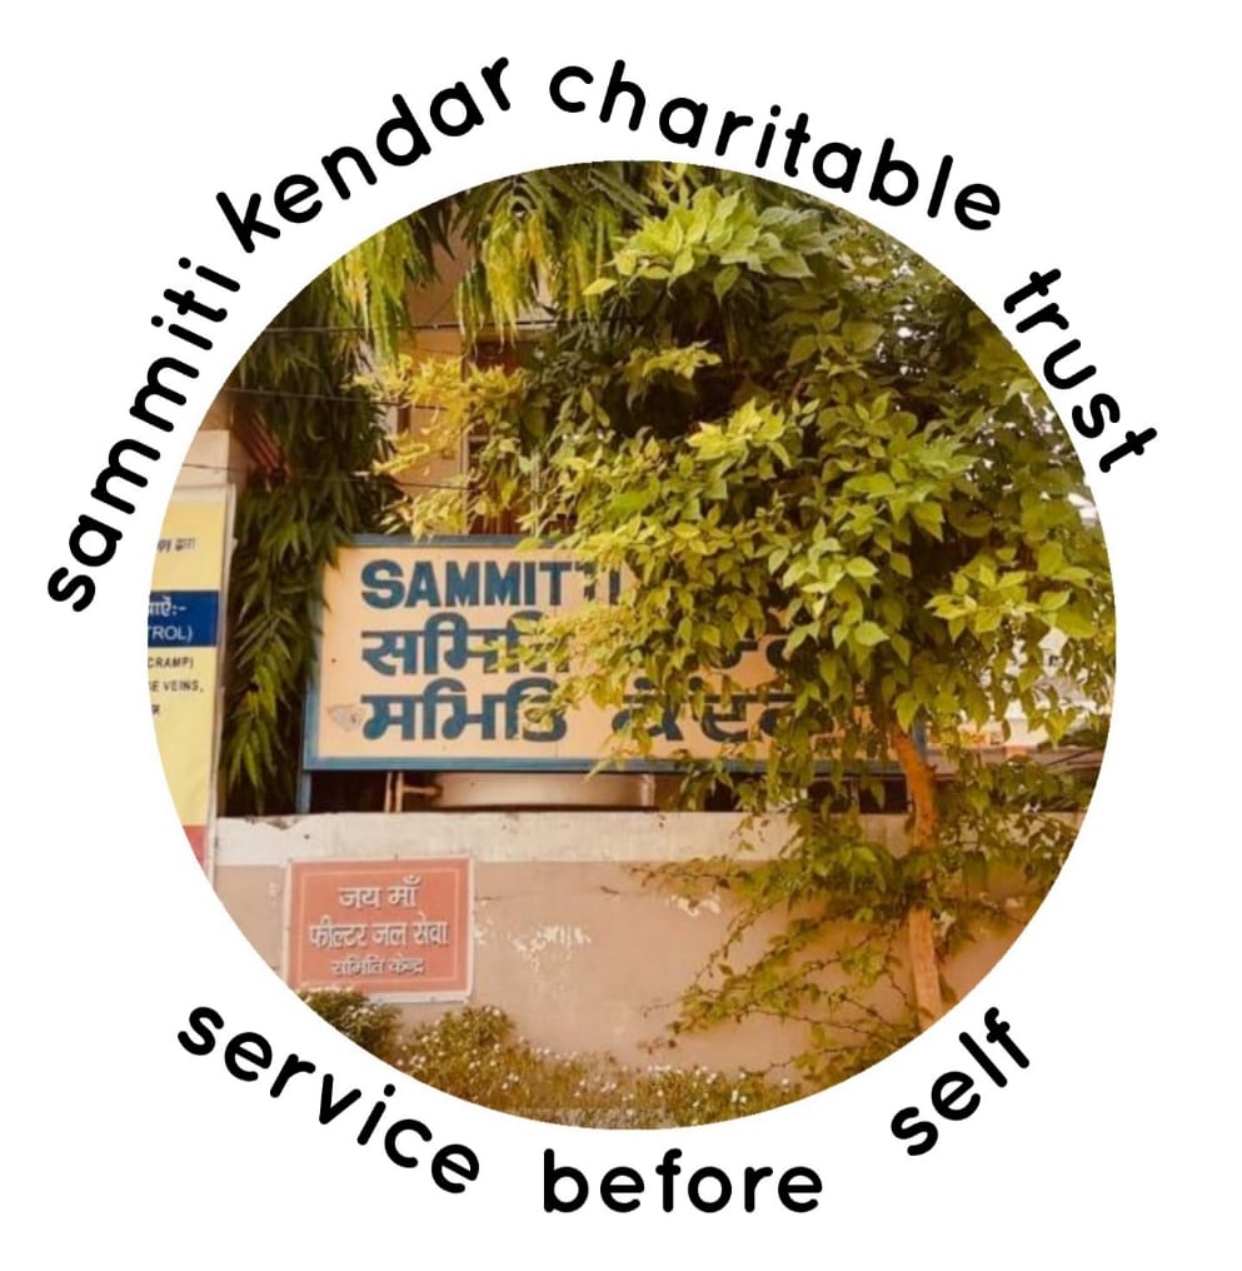 Sammiti Kendar Charitable Trust